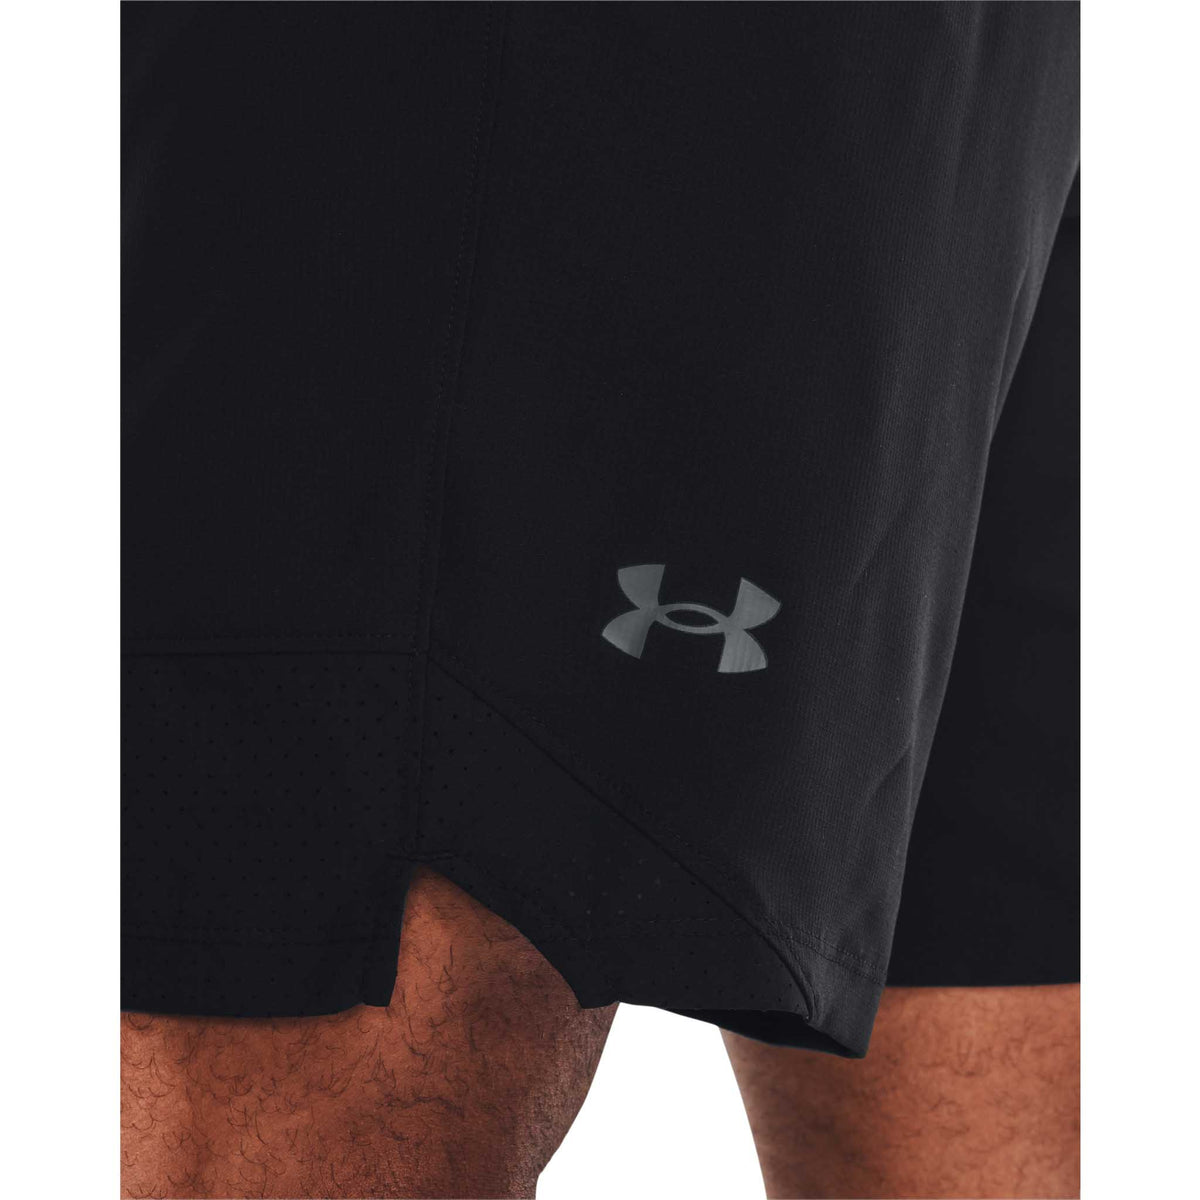 UA Vanish Woven 8-inch shorts pour homme details- black / pitch grey